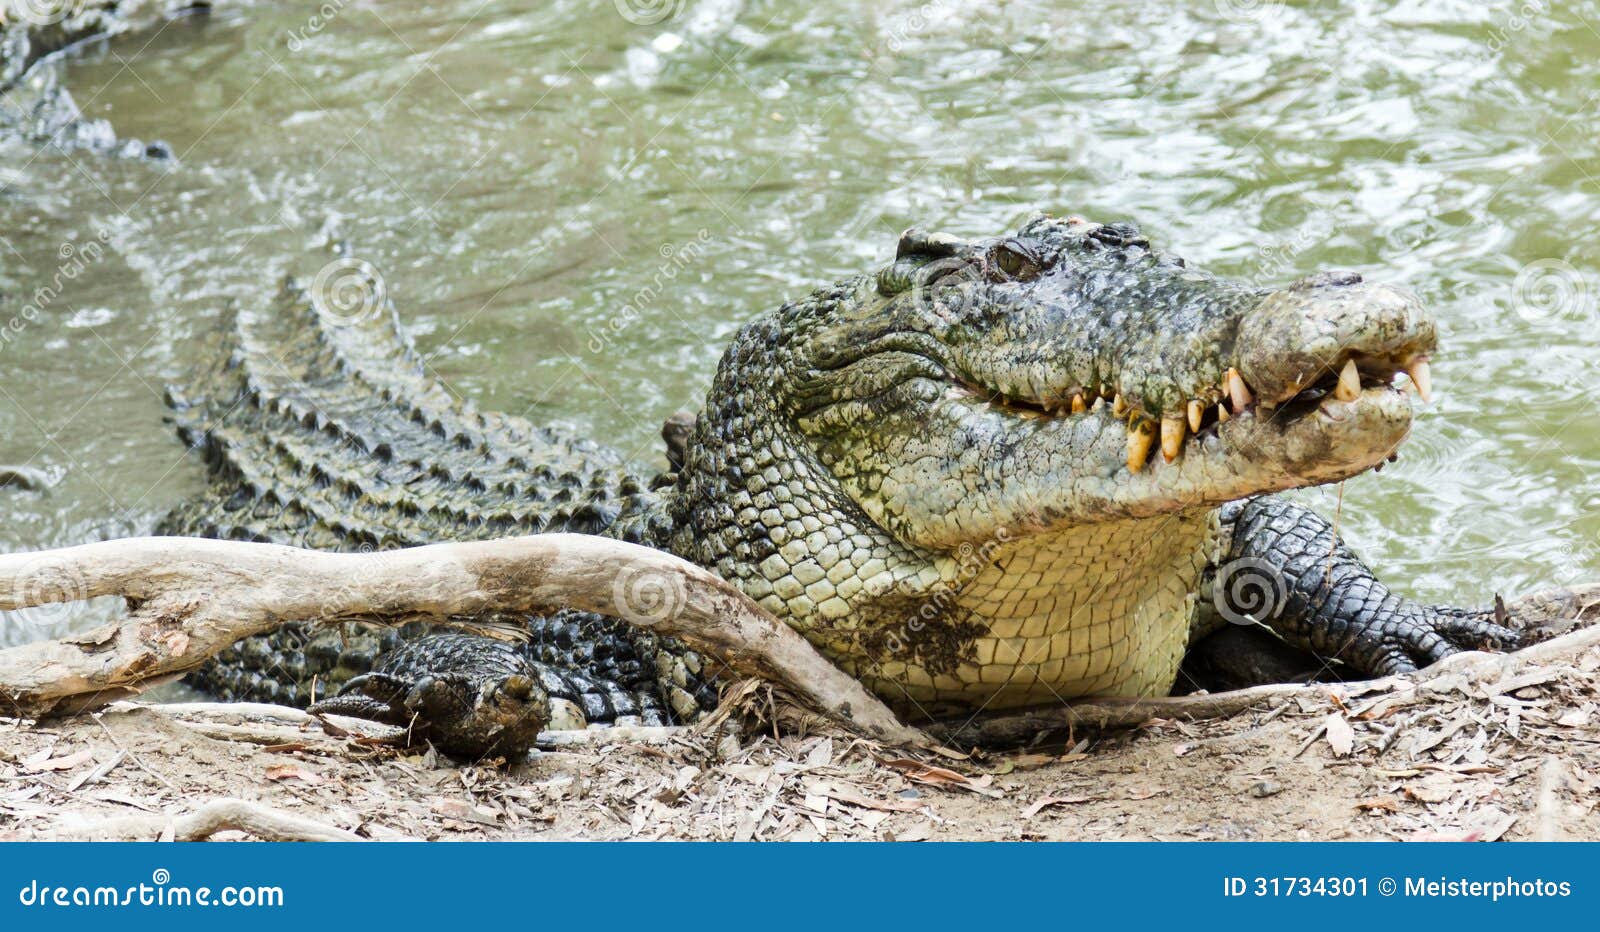 saltwater crocodile in australia